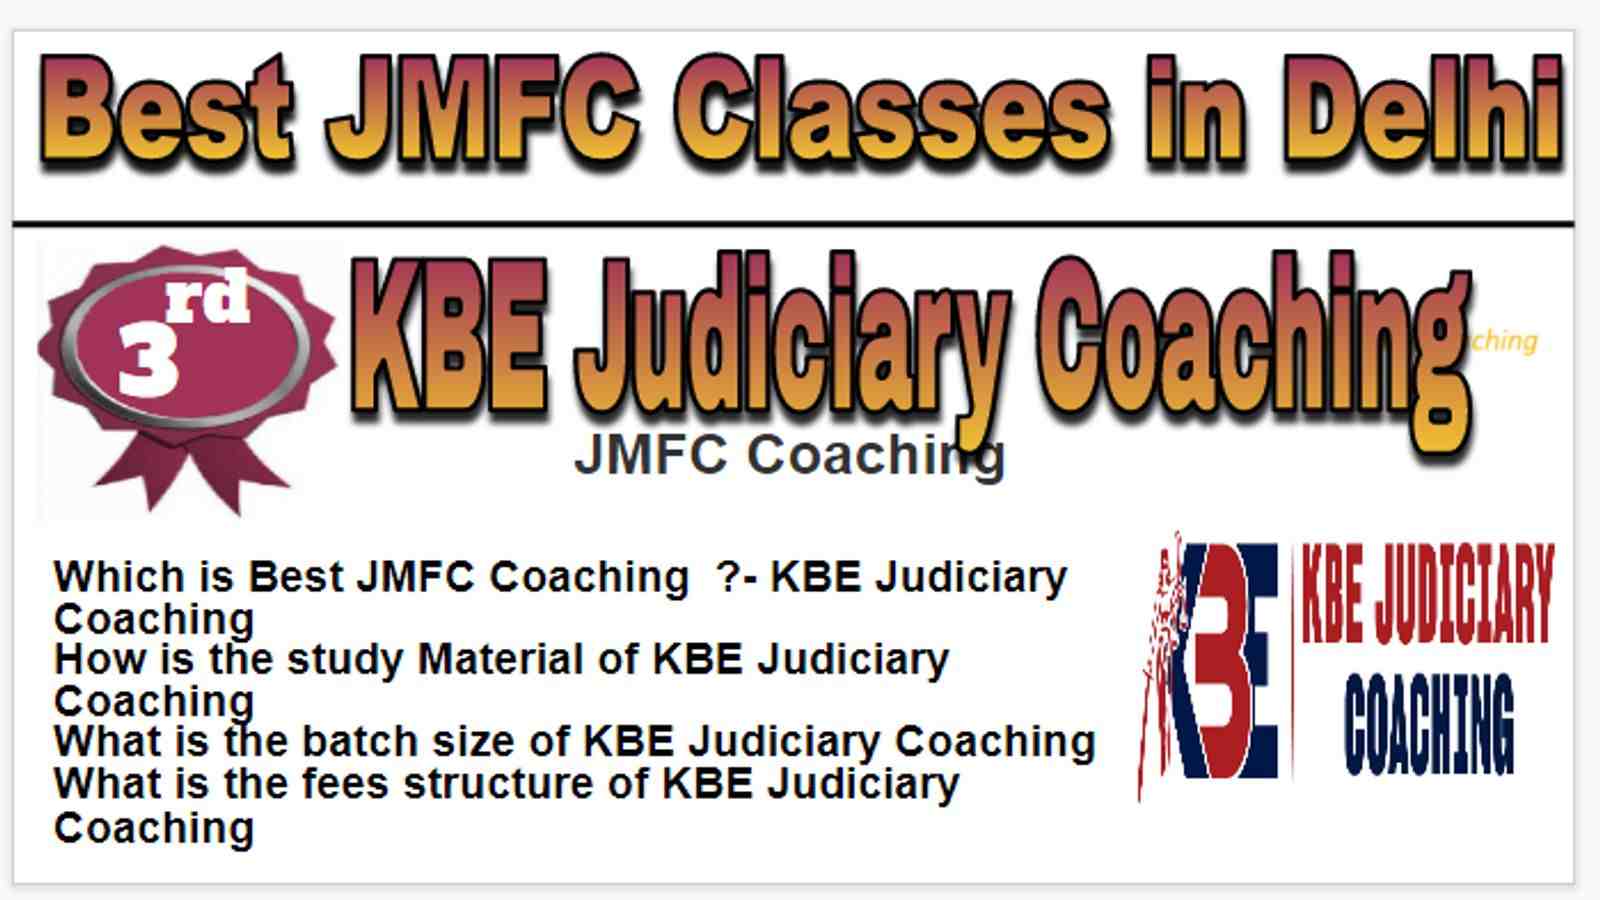 Rank 3 Best JMFC Classes in Delhi